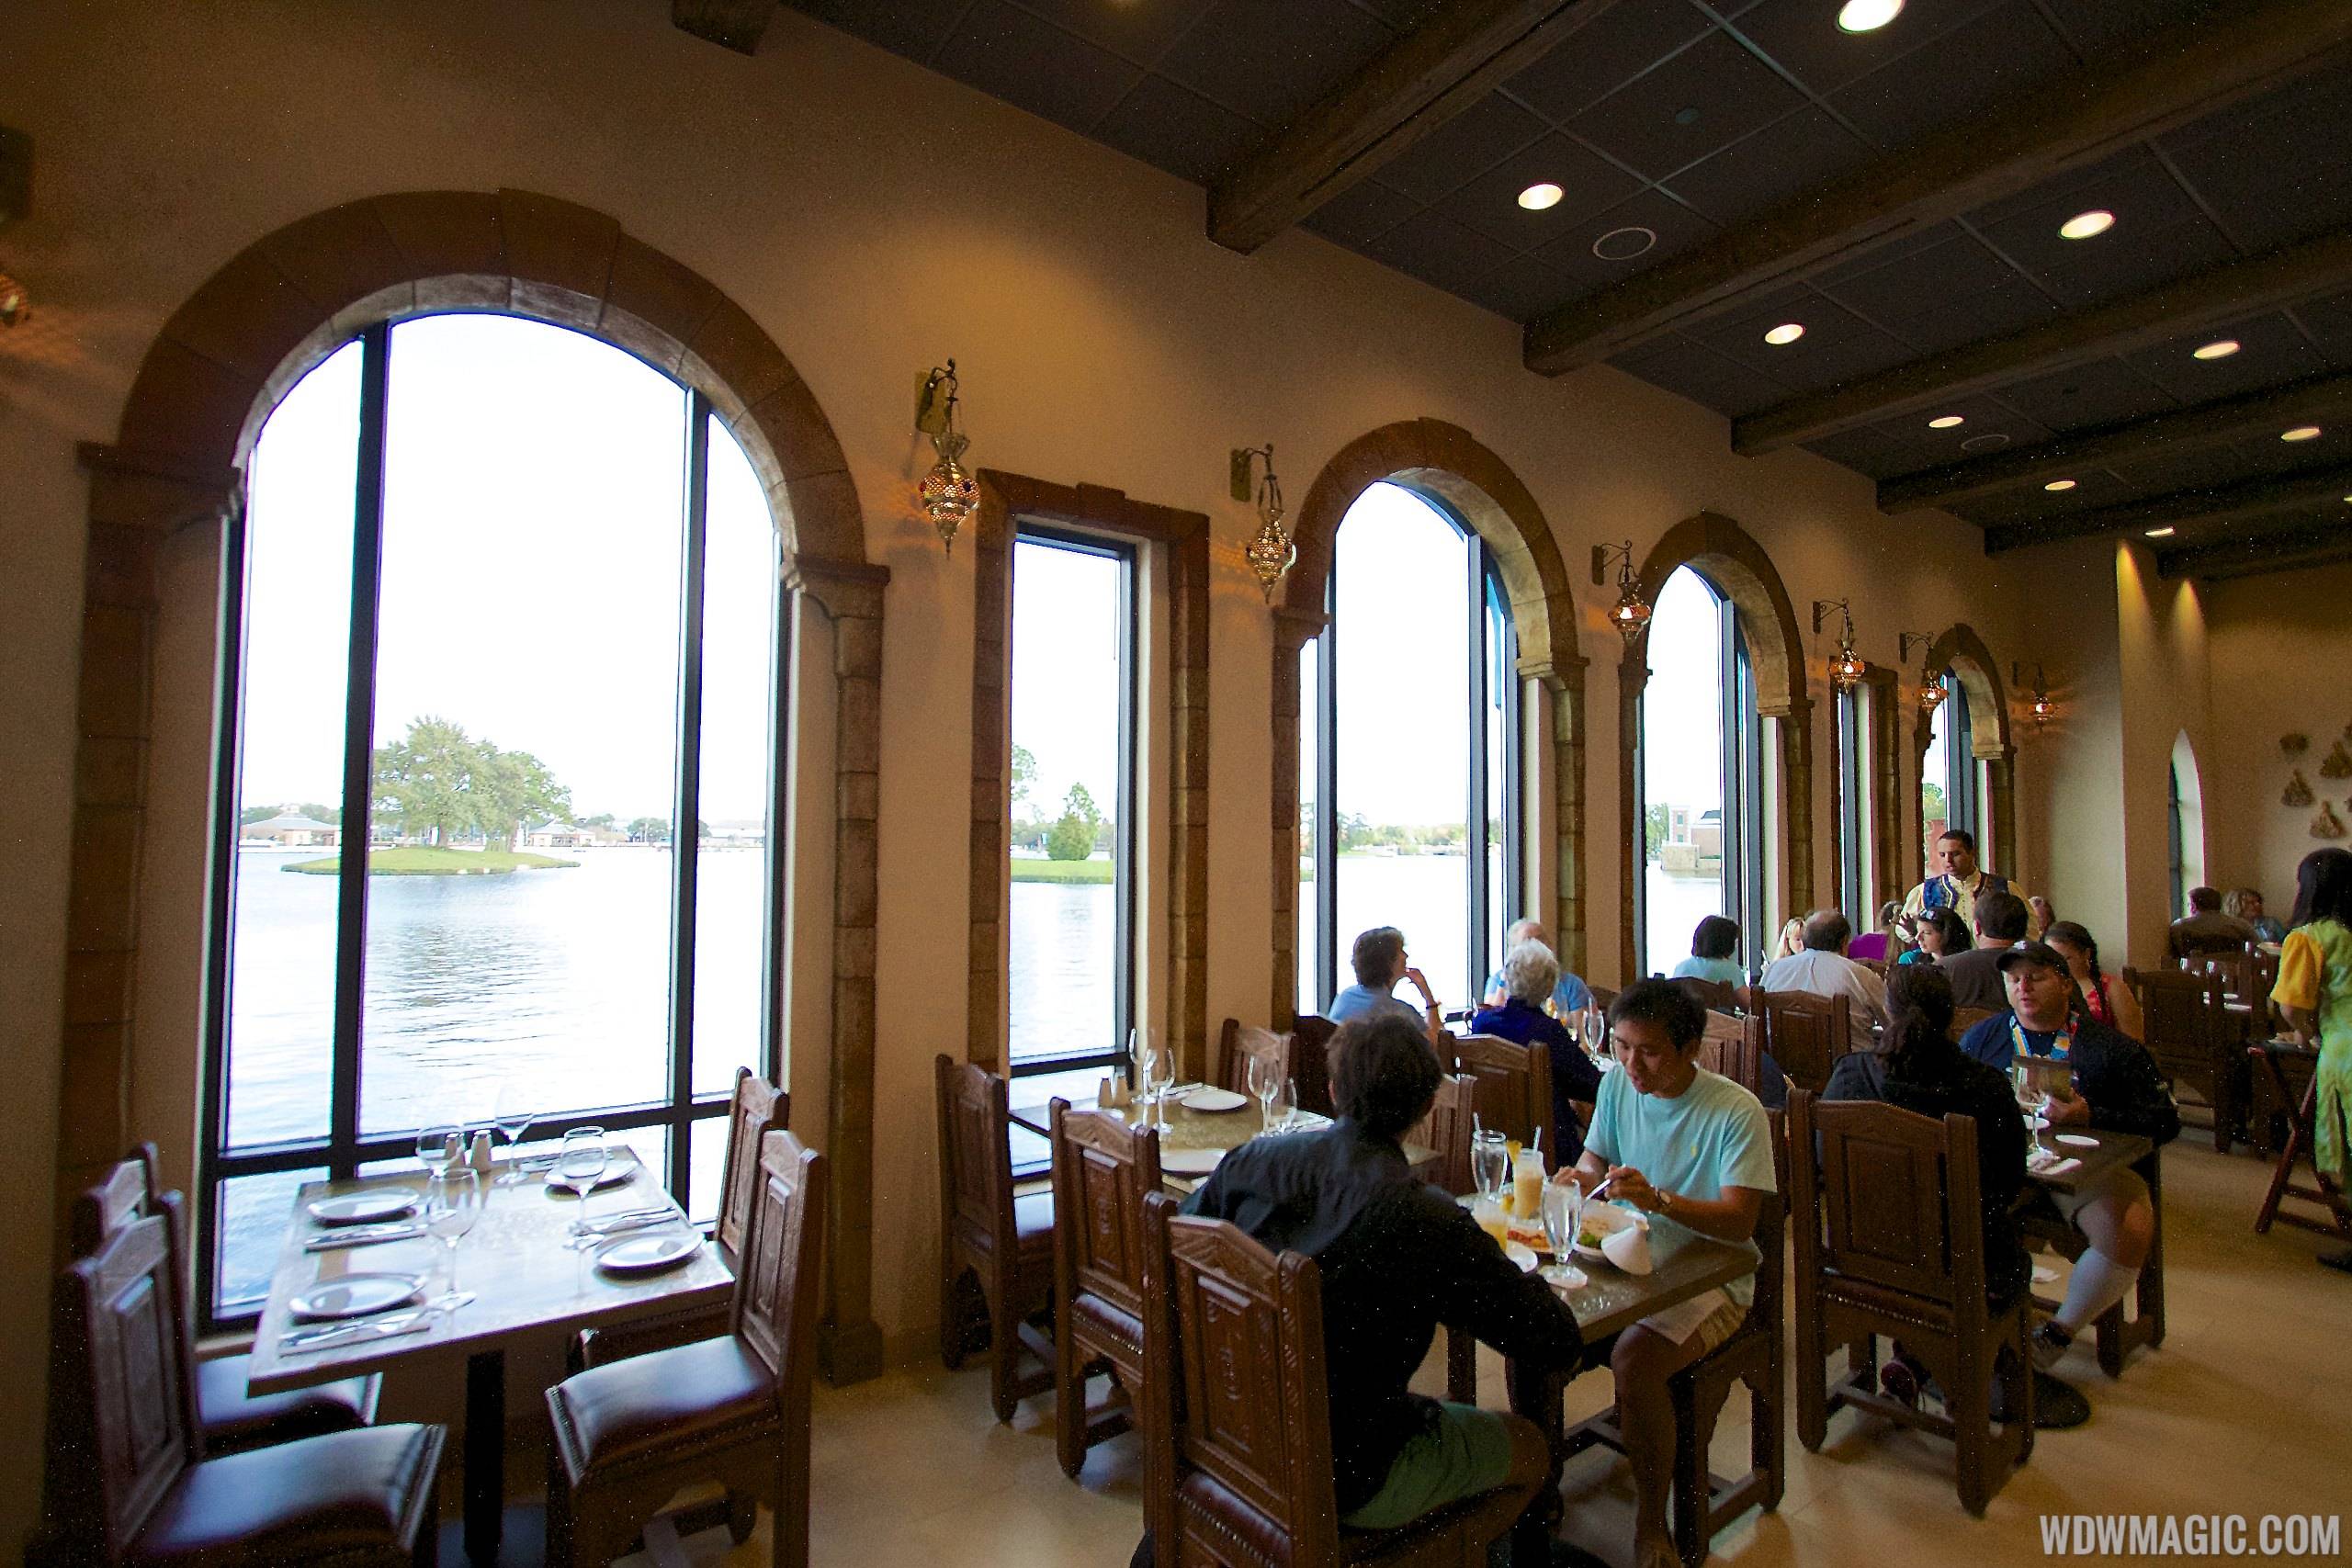 Spice Road Table - Indoor dining room overlooking World Showcase Lagoon